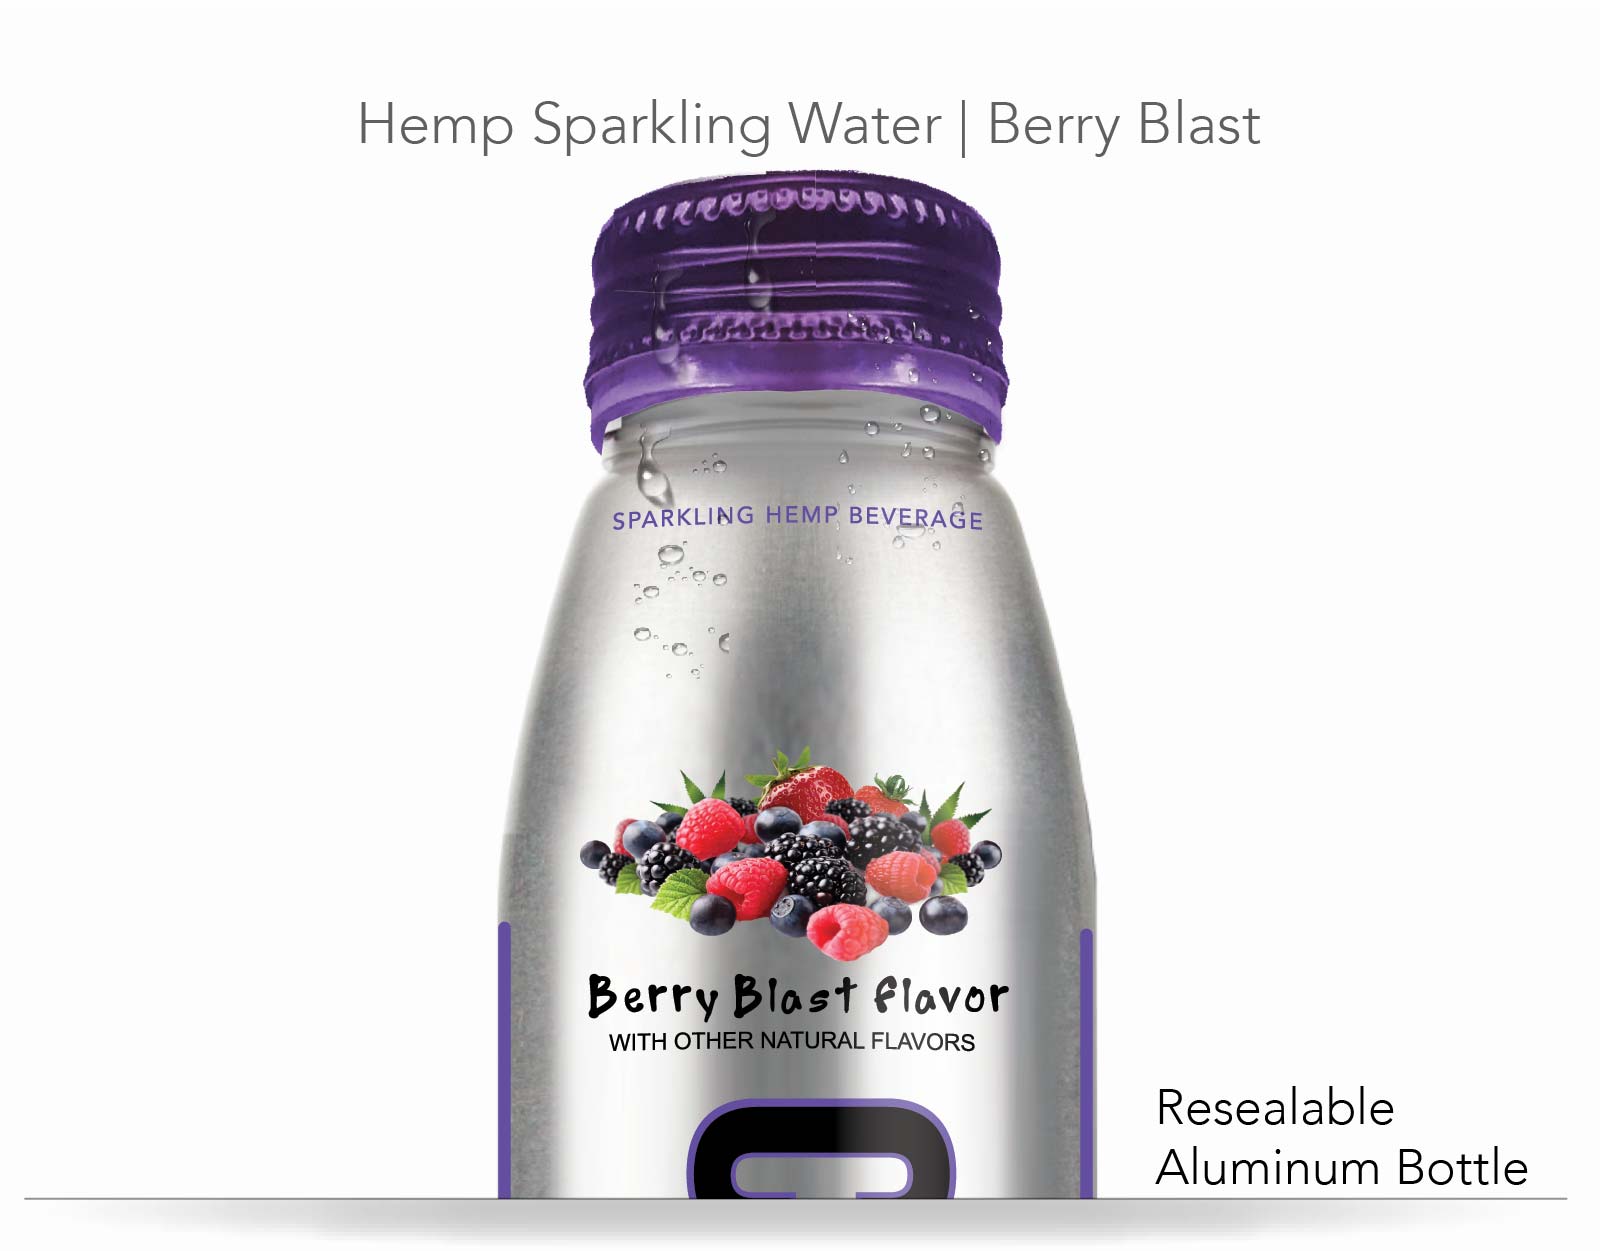 Sparkling Hemp Water | Berry Blast